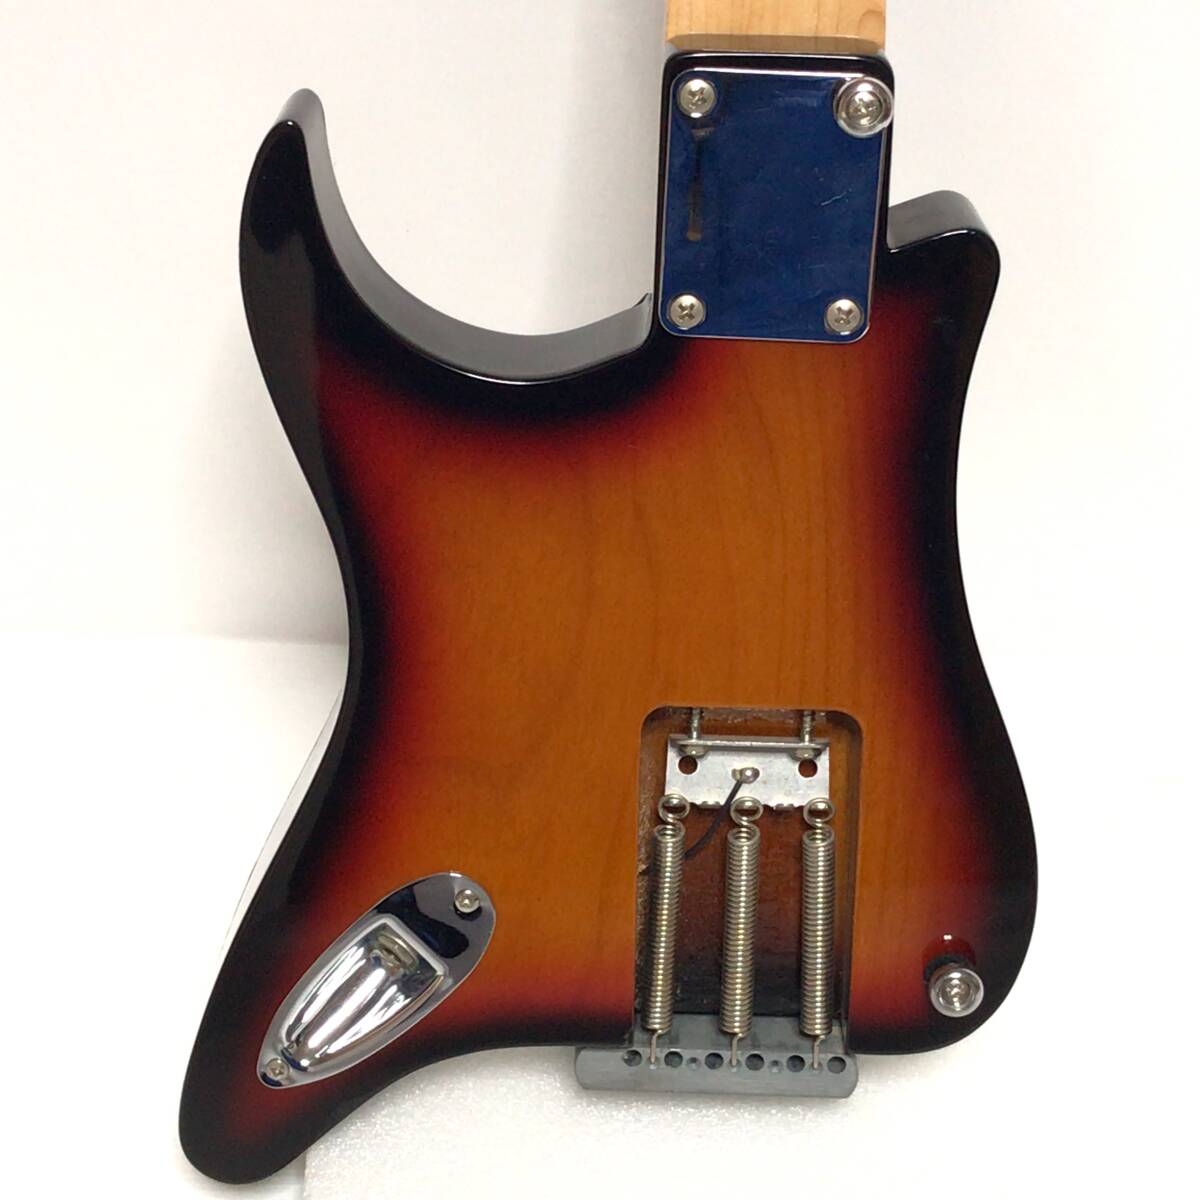  редкостный Grass Roots GR-PGG 3TS стакан roots Fender Stratocaster модель электрогитара Maple шея 